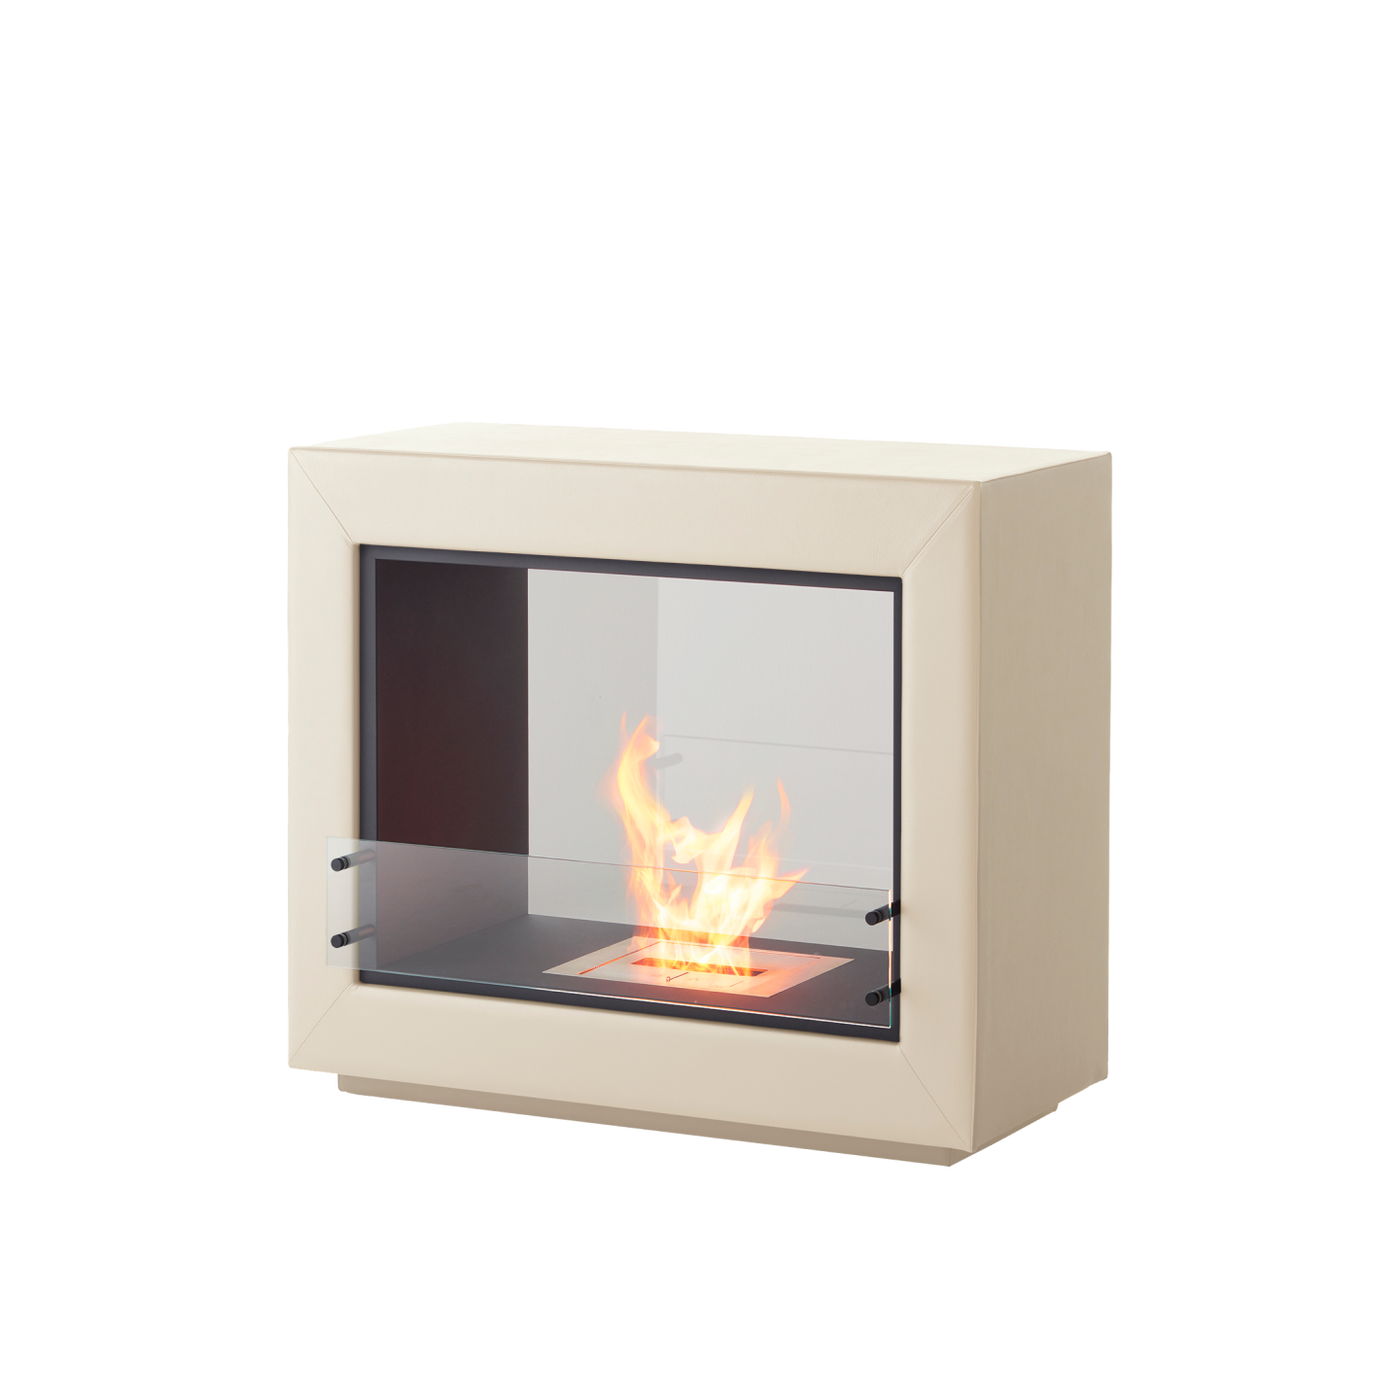 VISION LEATHER | バイオエタノール暖炉「EcoSmart Fire」